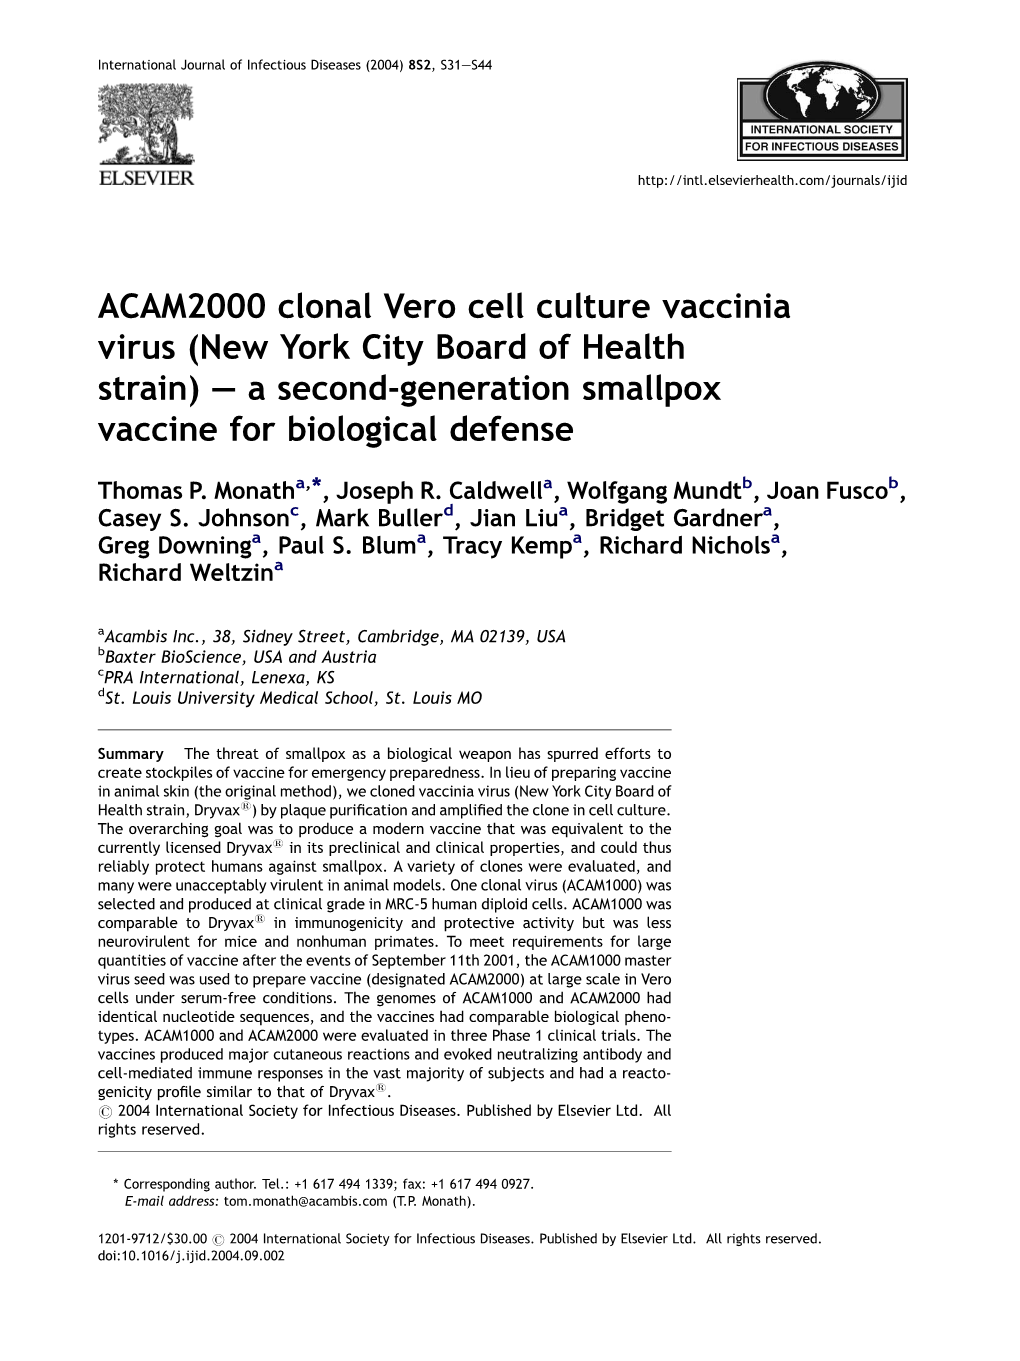 ACAM2000 Clonal Vero Cell Culture Vaccinia Virus (New York City Board of Health Strain) — a Second-Generation Smallpox Vaccine for Biological Defense